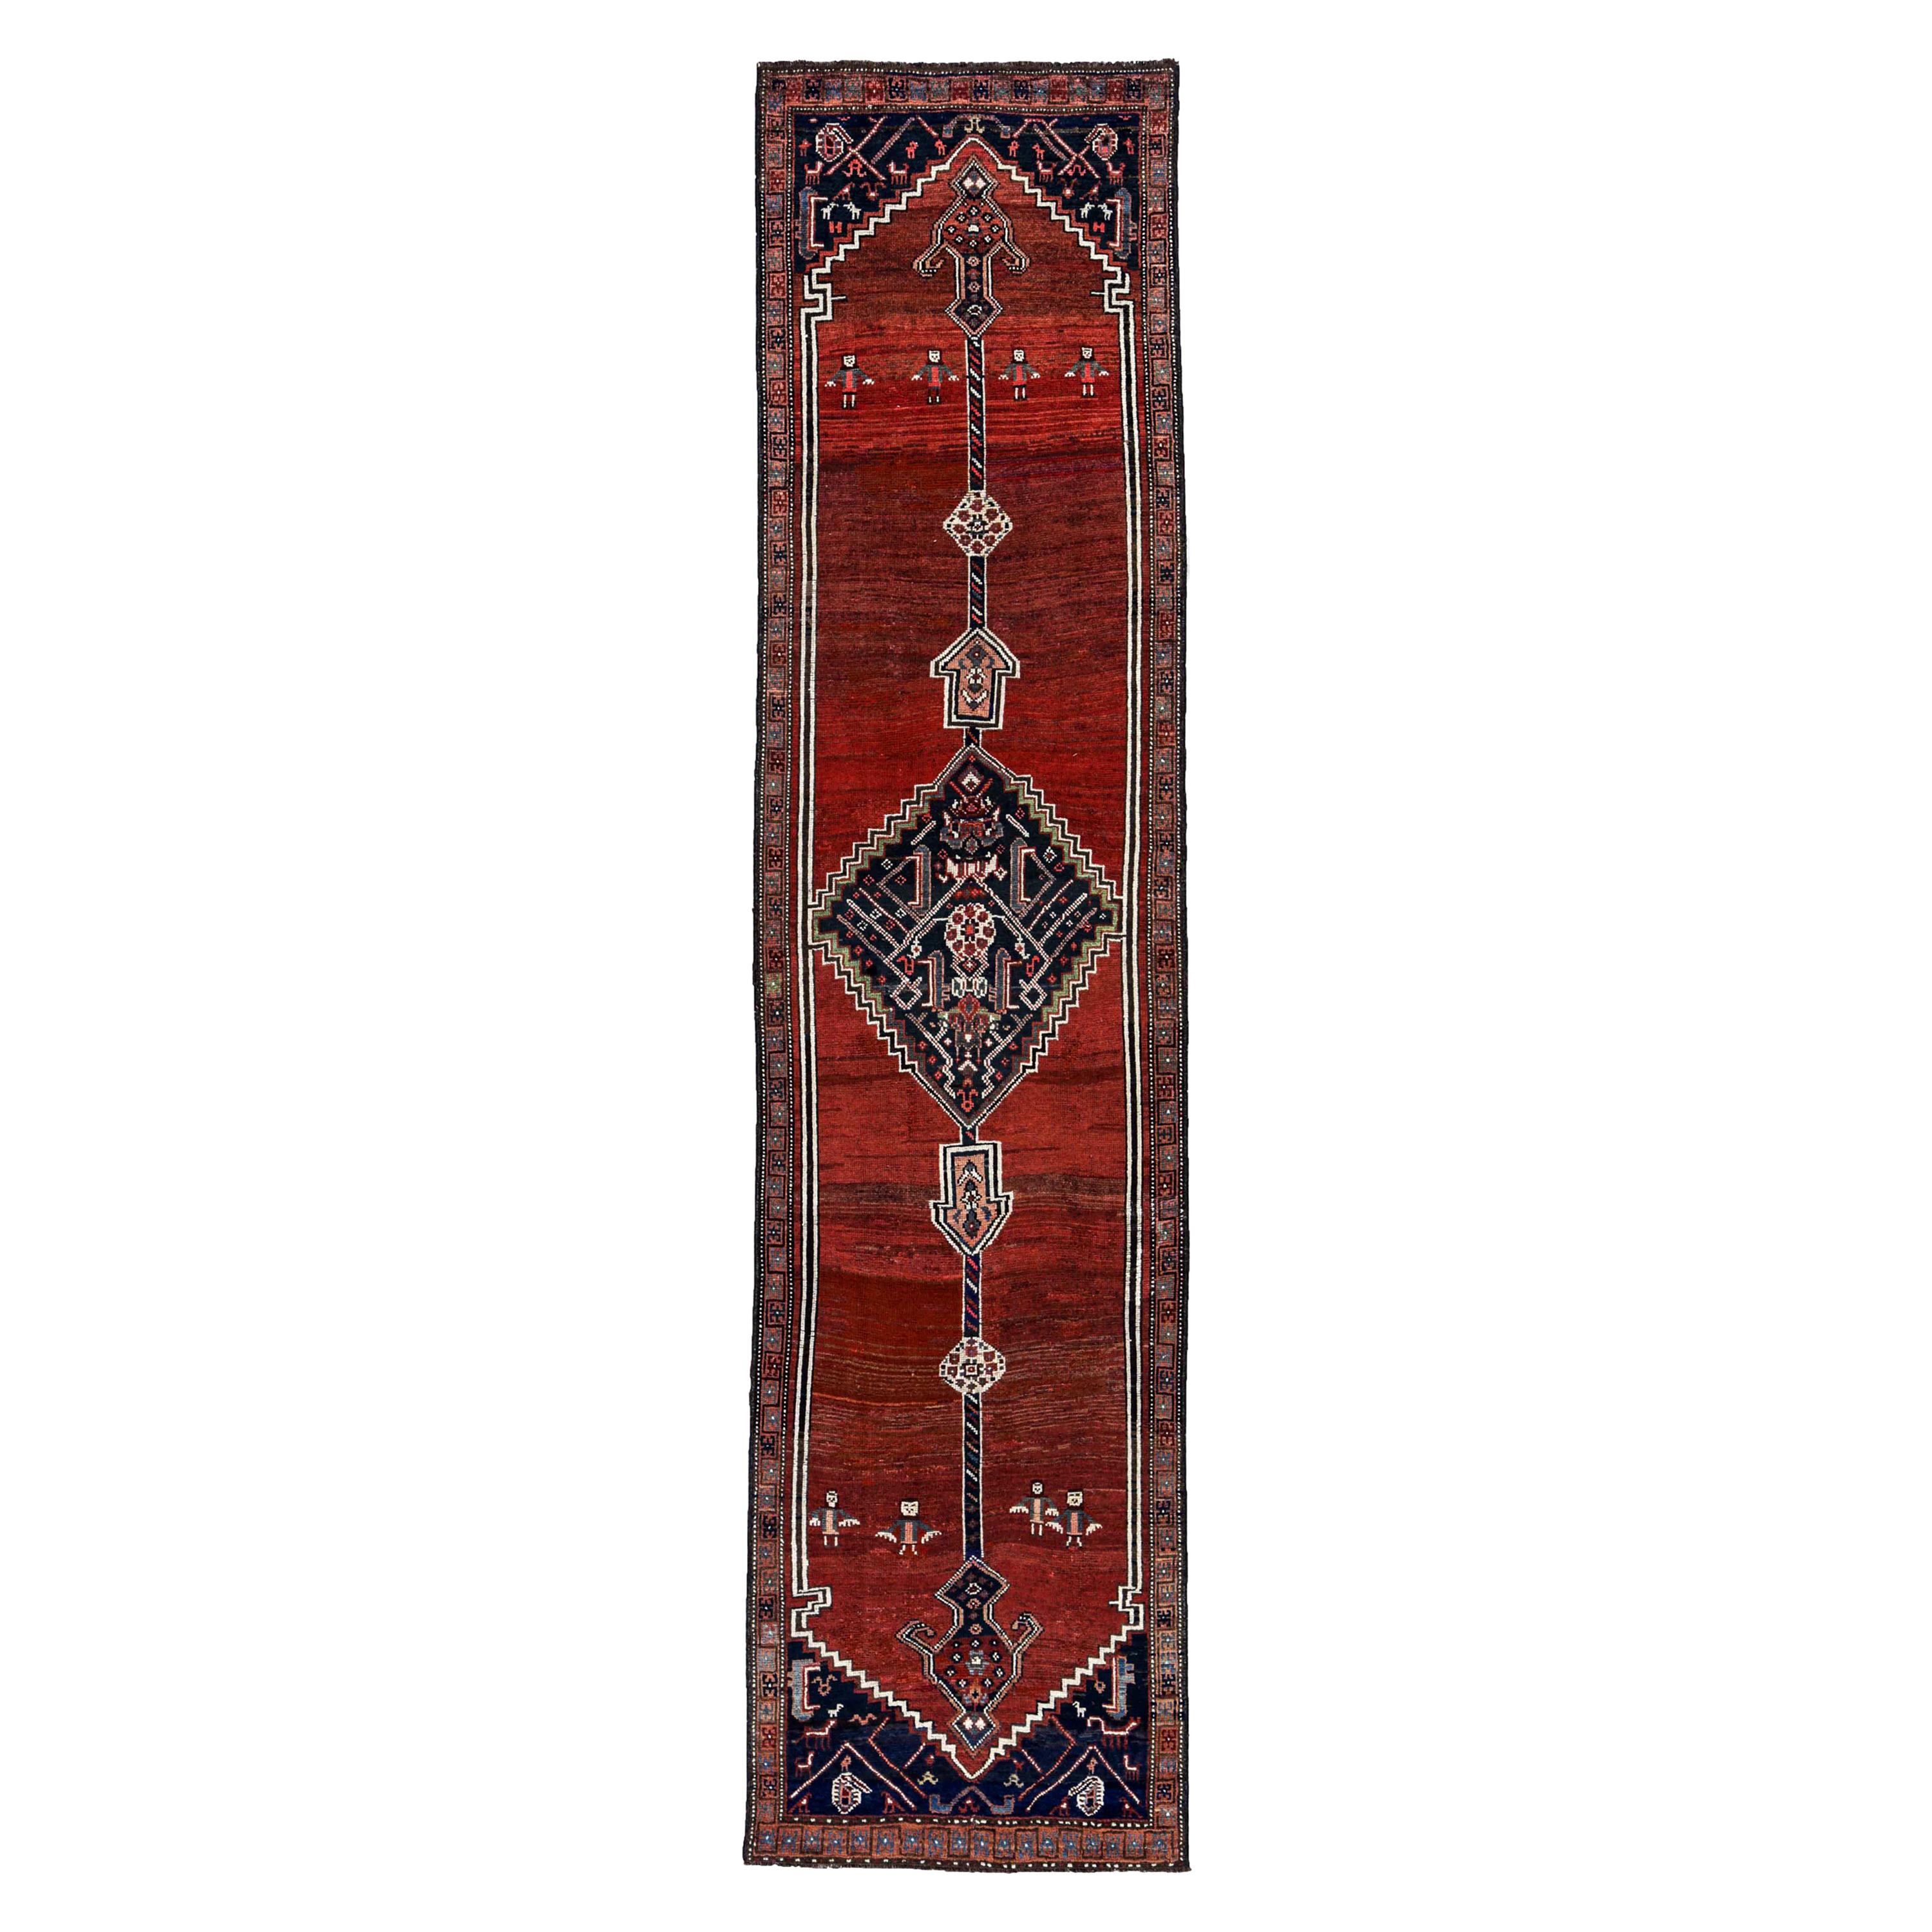 Antique Persian Runner Rug Bijar Design